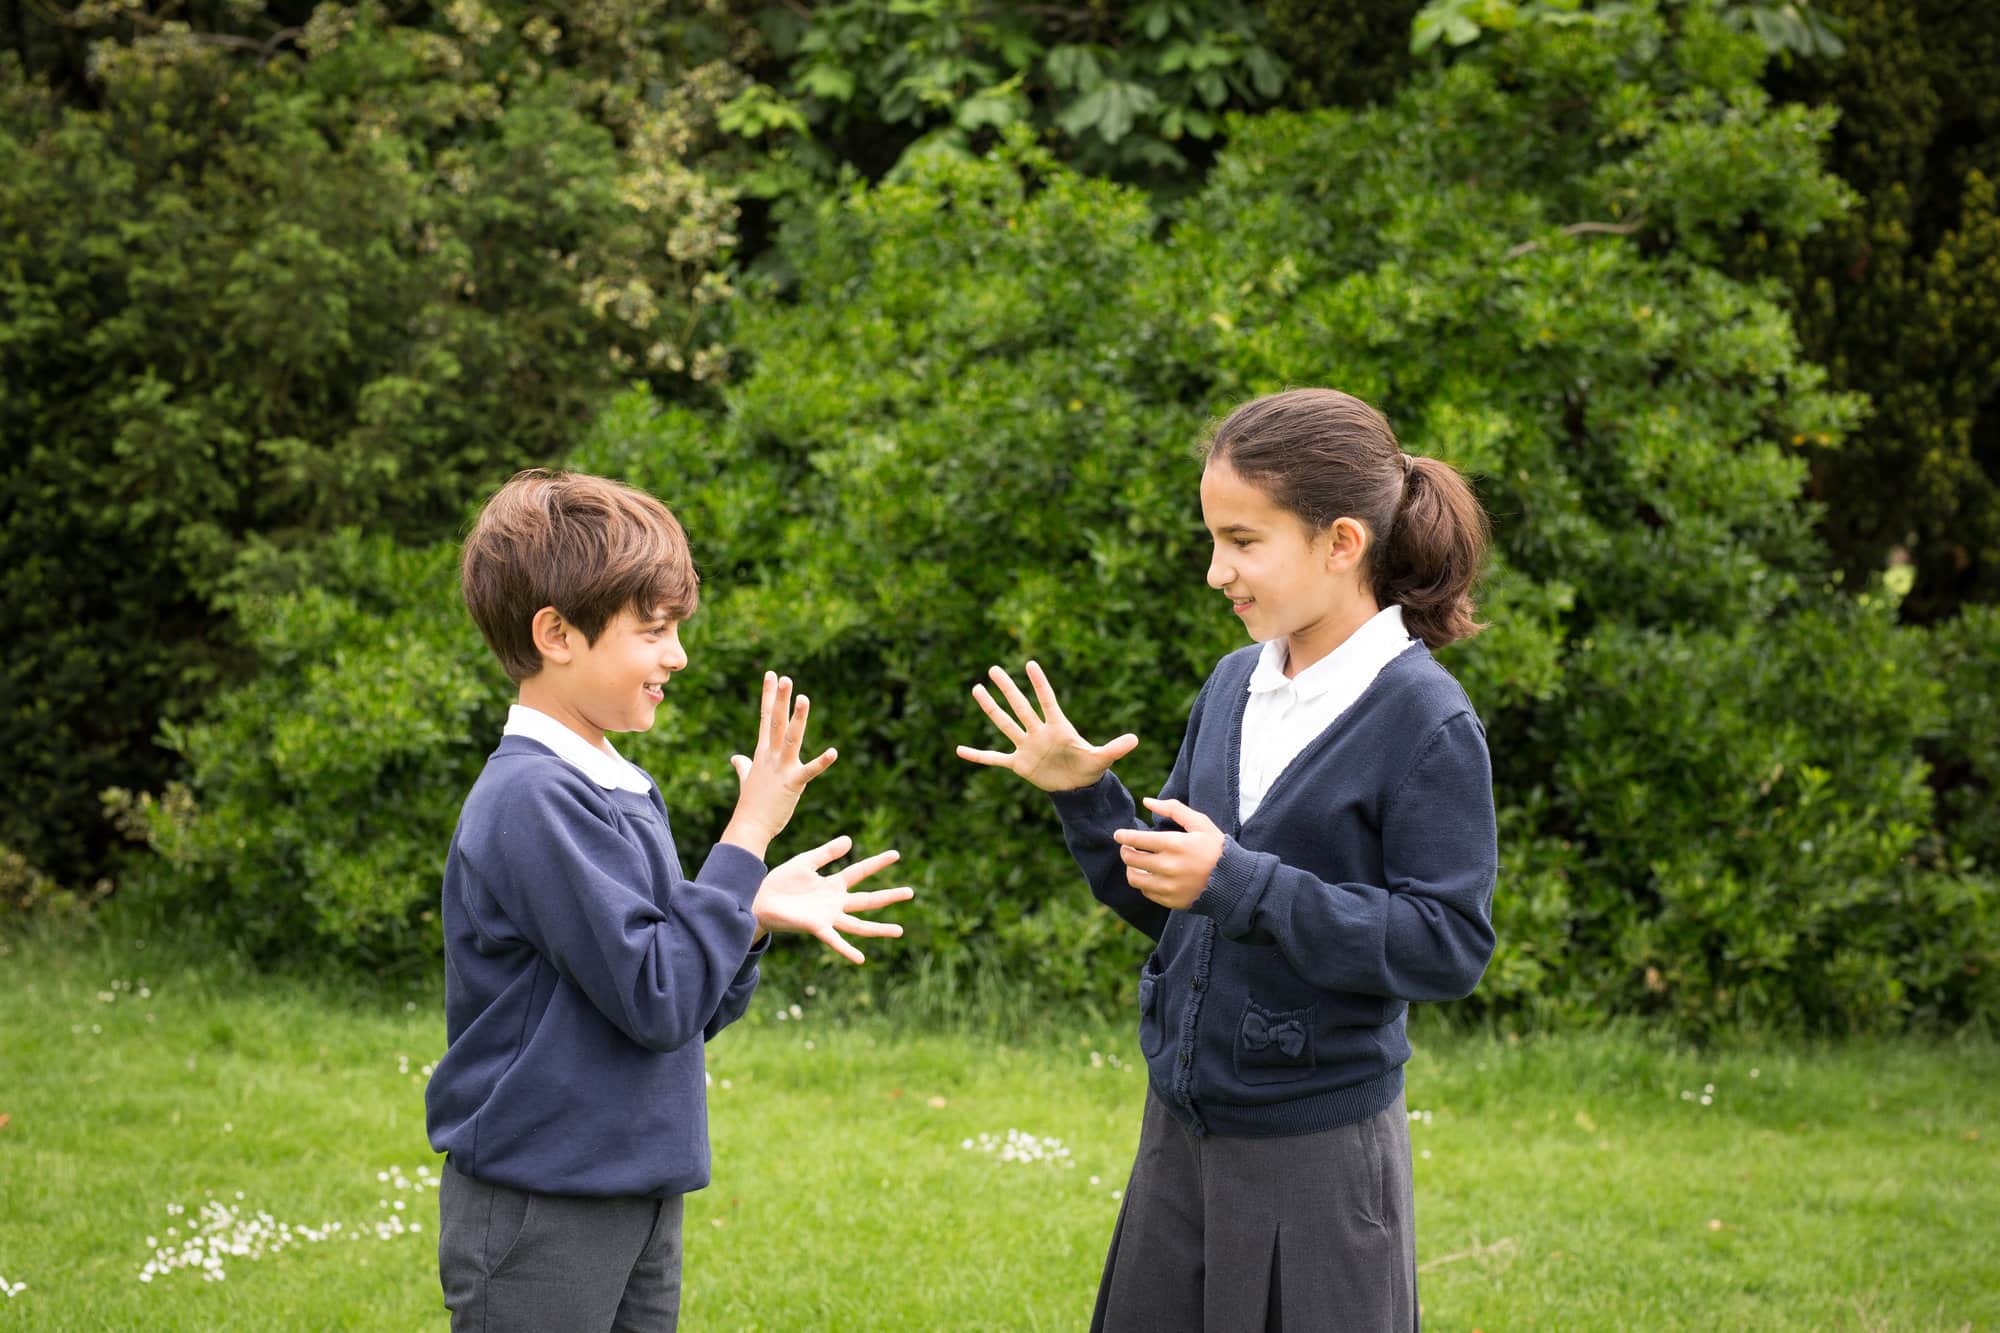 siblings playing in school uniform in park, taken by London school photographer